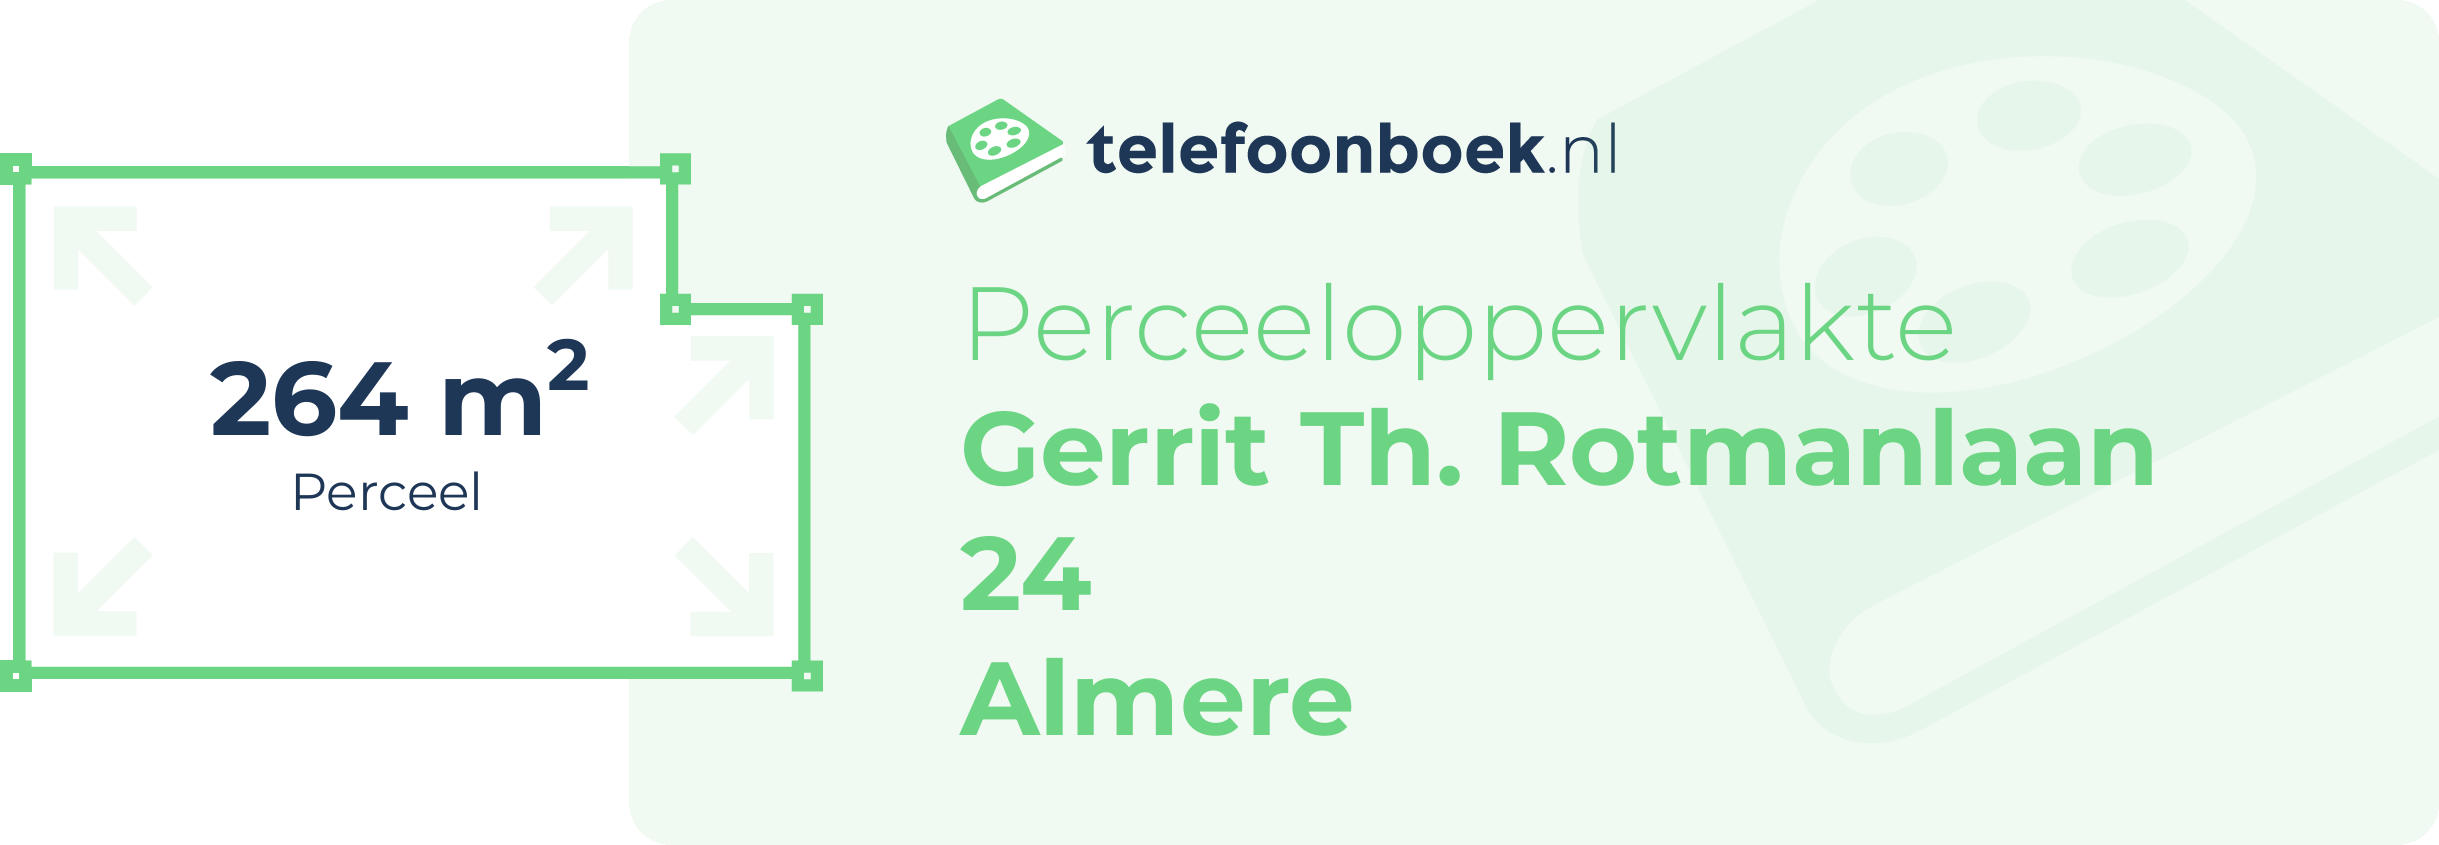 Perceeloppervlakte Gerrit Th. Rotmanlaan 24 Almere